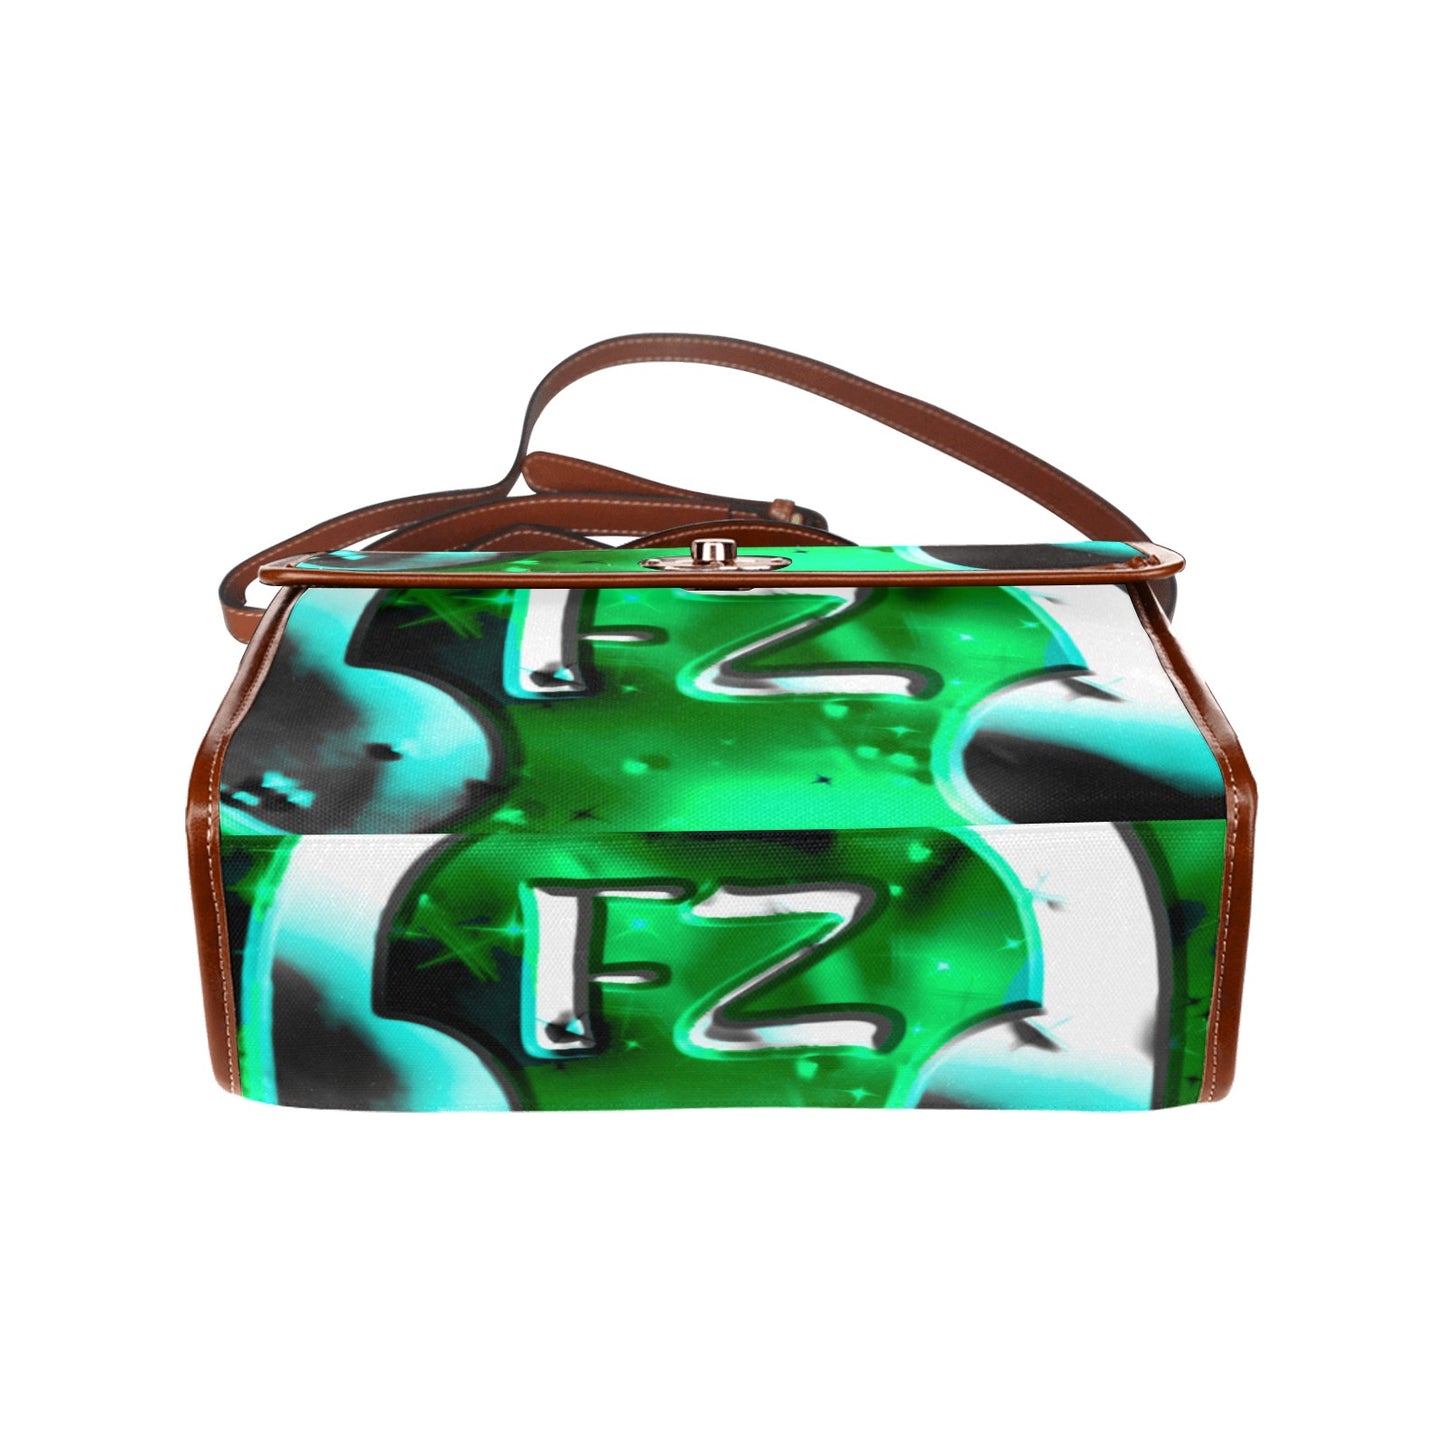 fz green abstract handbag all over print waterproof canvas bag(model1641)(brown strap)